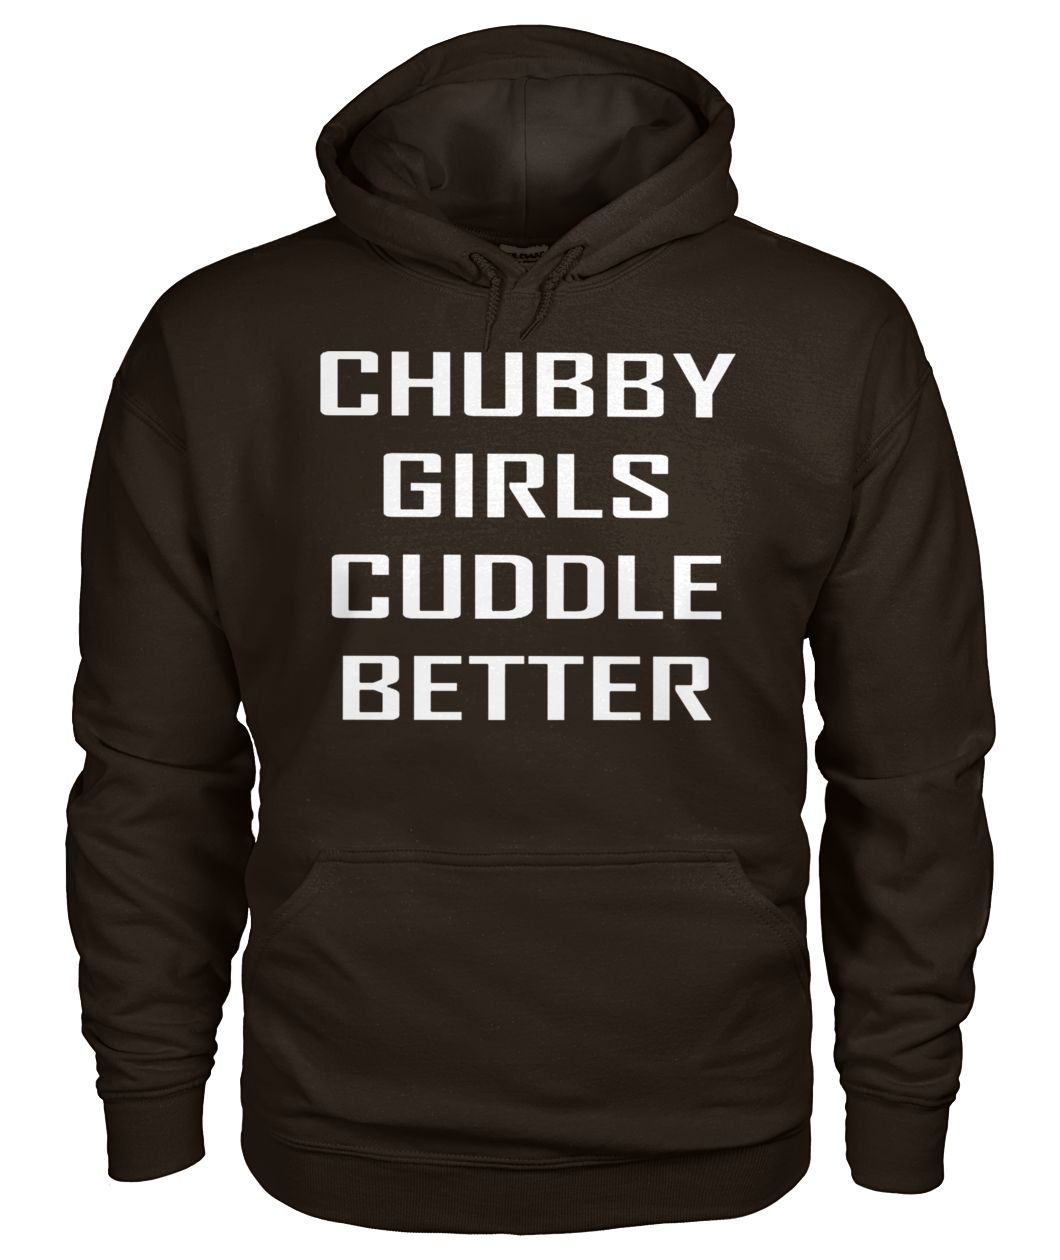 Chubby girls cuddle better gildan hoodie